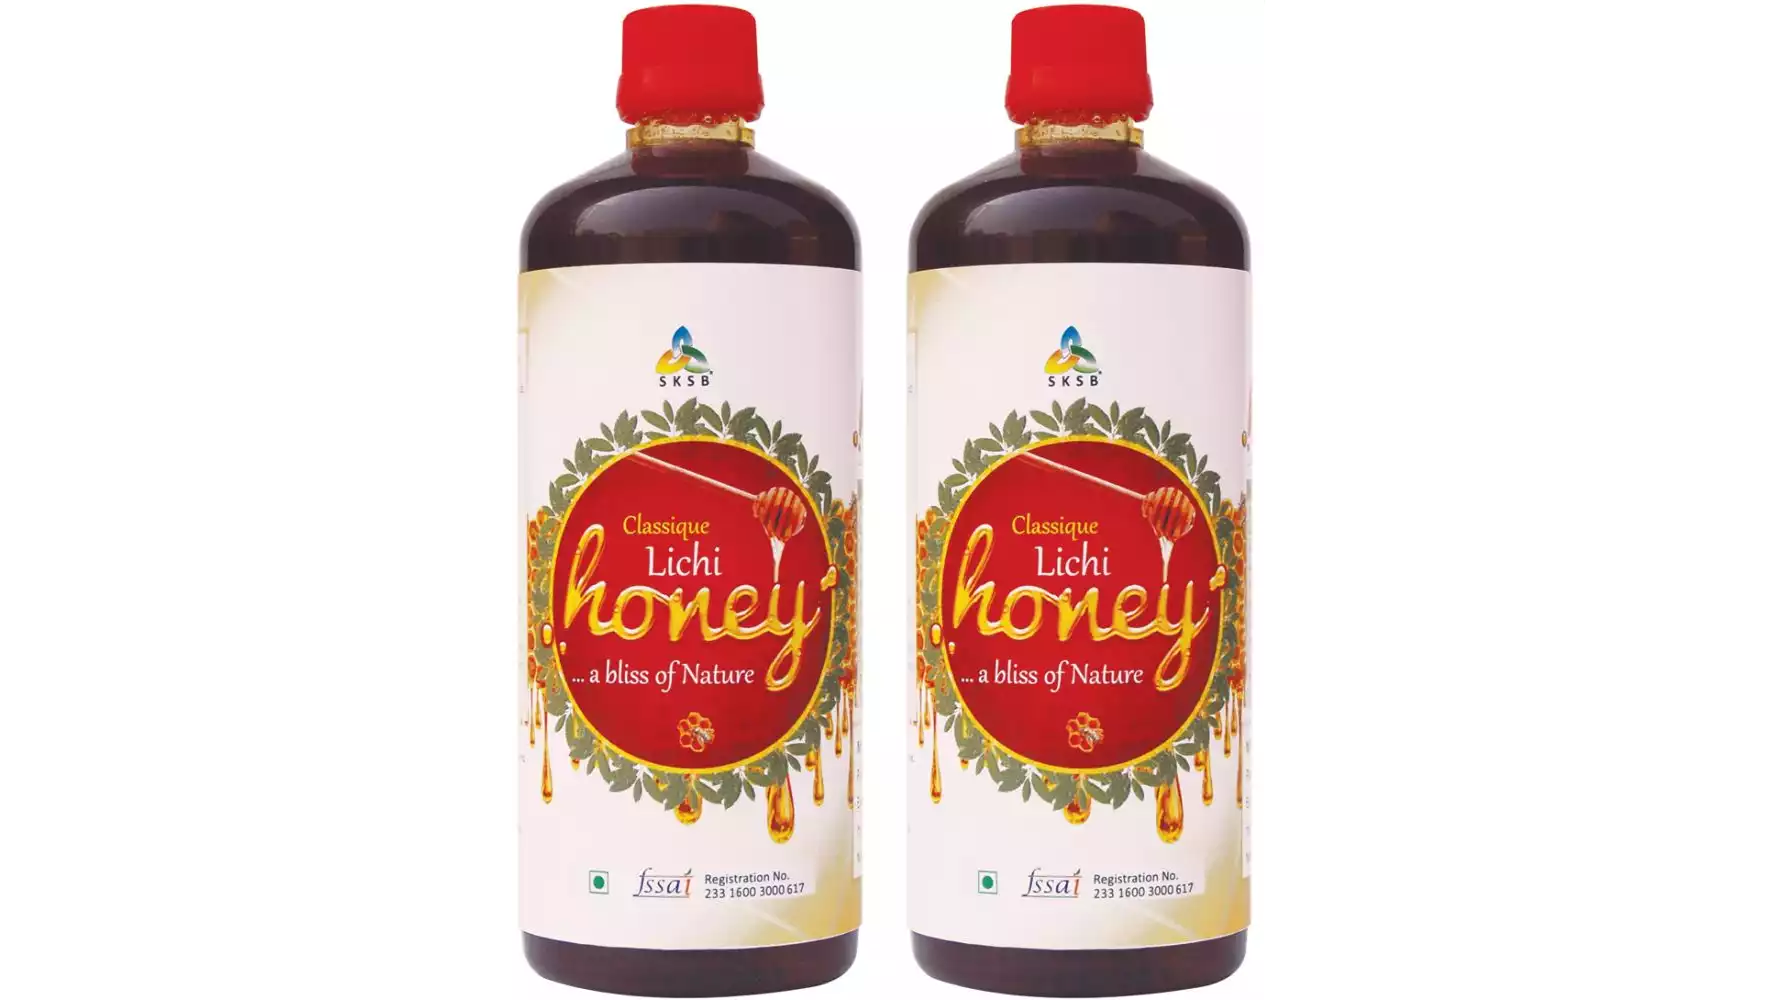 SKSB Natural Honey Lichi (750g, Pack of 2)